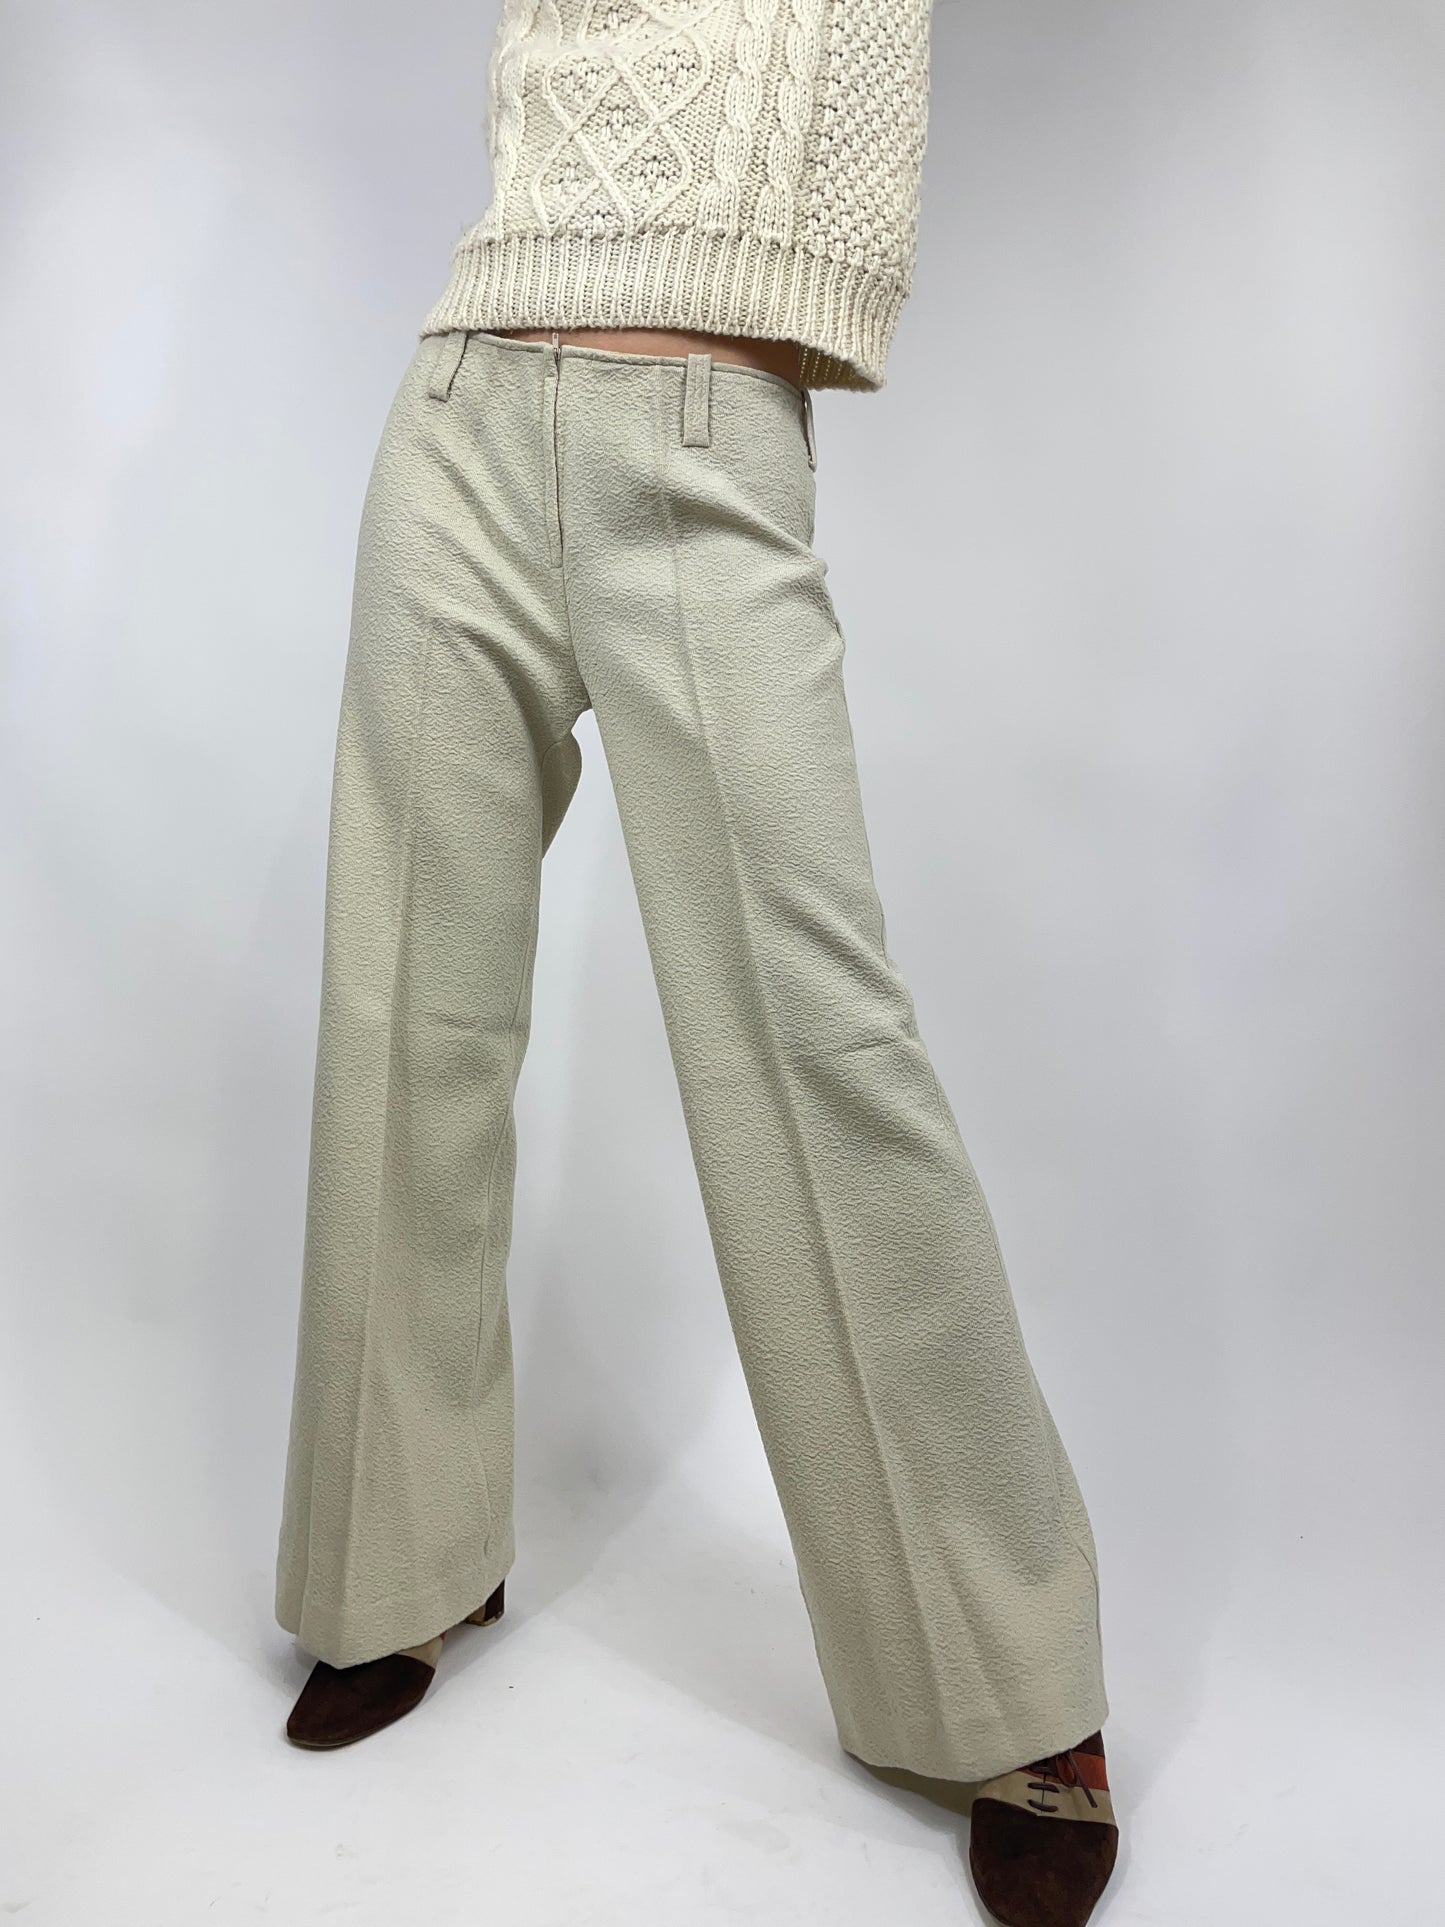 Pantalone Alta Classe 1970s